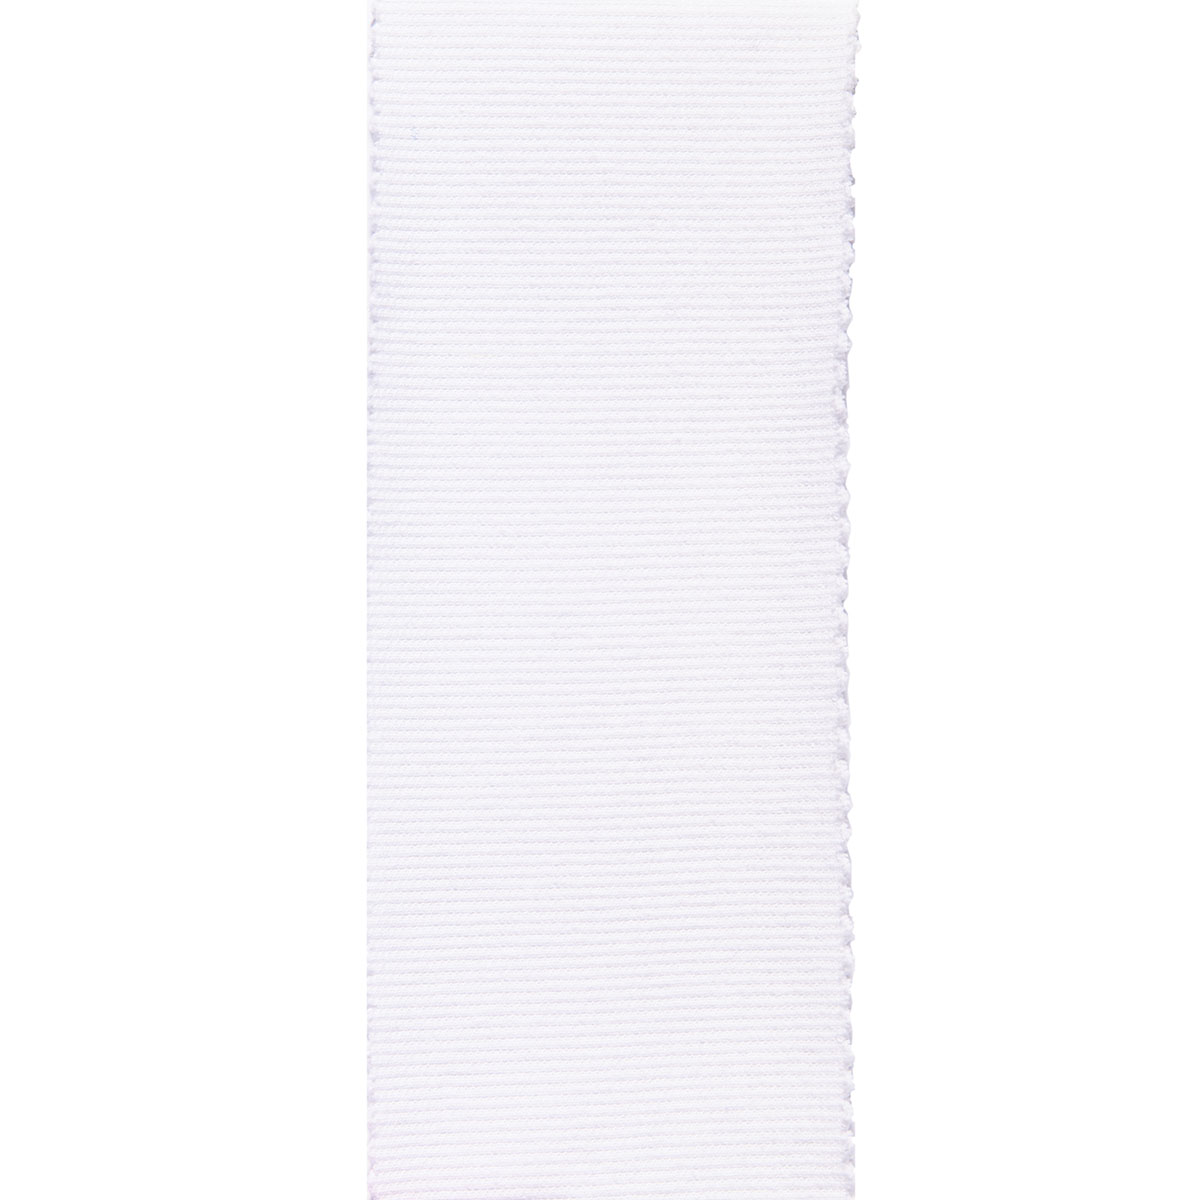 Dekostoff Gisele weiß in 40cm Breite (METERWARE) Baumwollstoff Stoff aus 97% Baumwolle